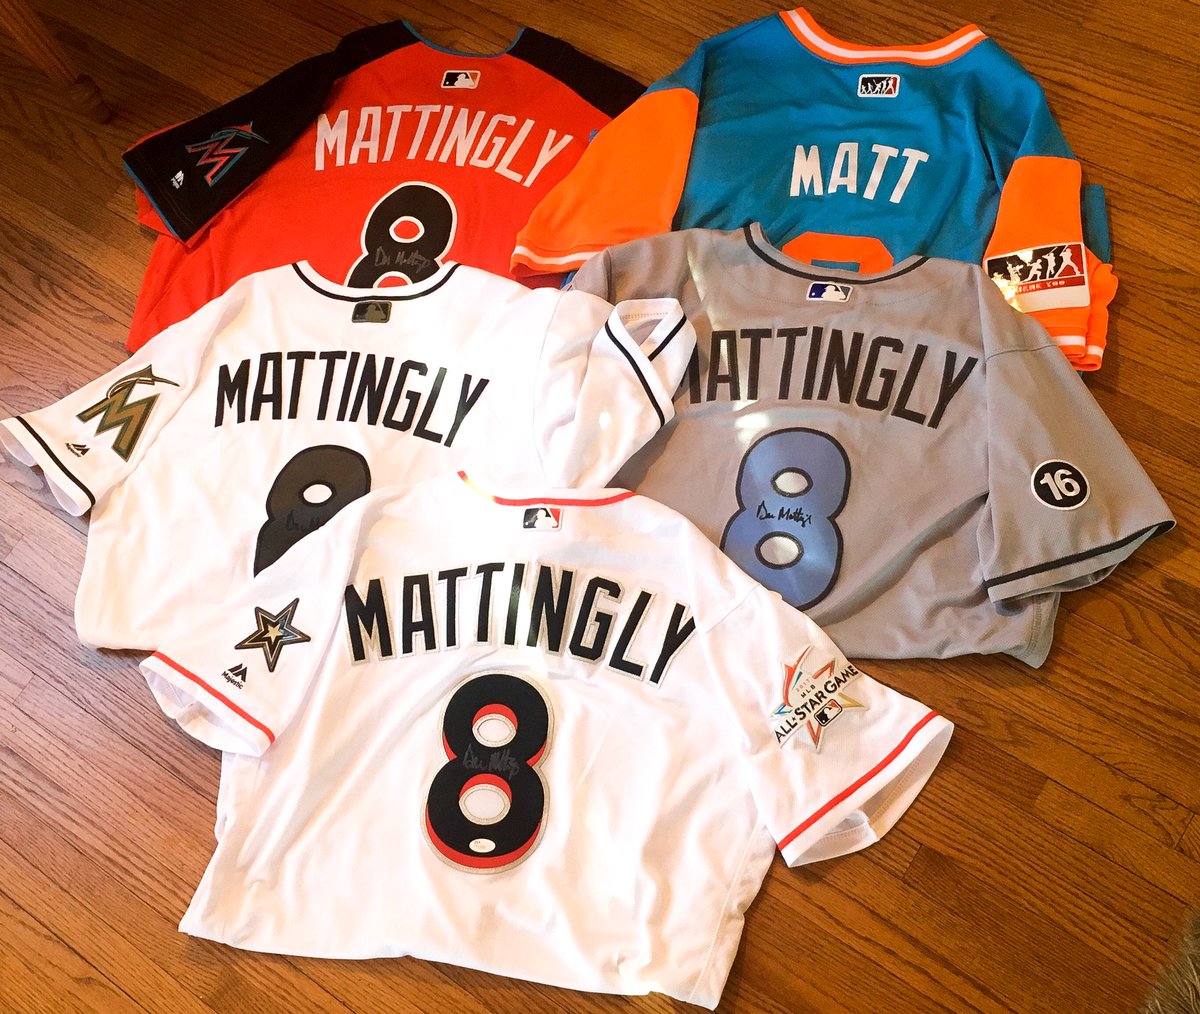 mattingly marlins jersey